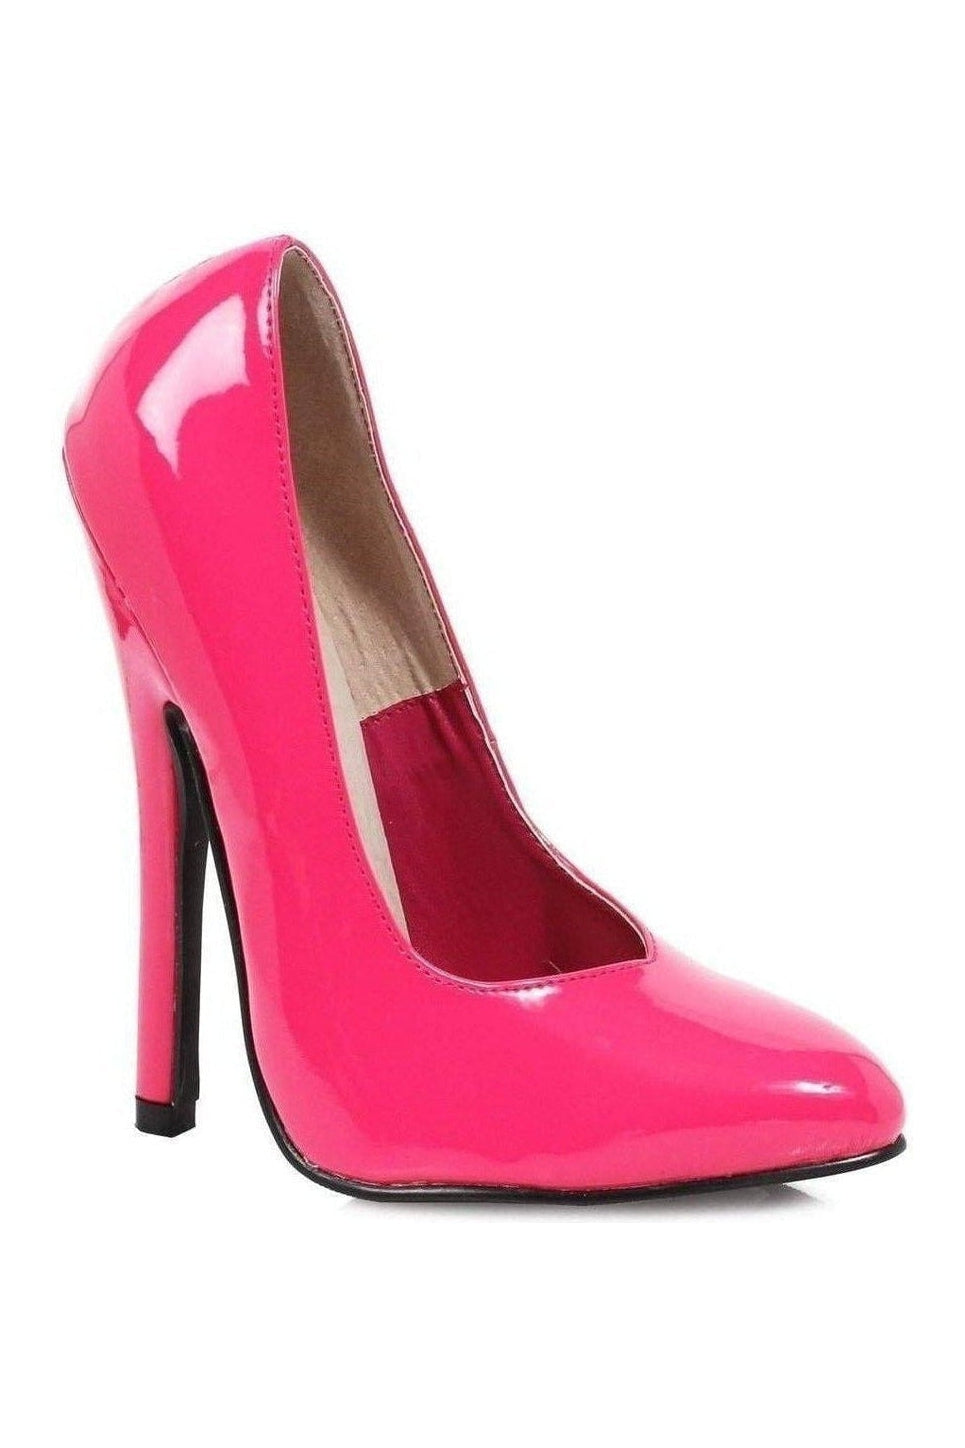 8260 Pump | Fuchsia Patent-Pumps- Stripper Shoes at SEXYSHOES.COM